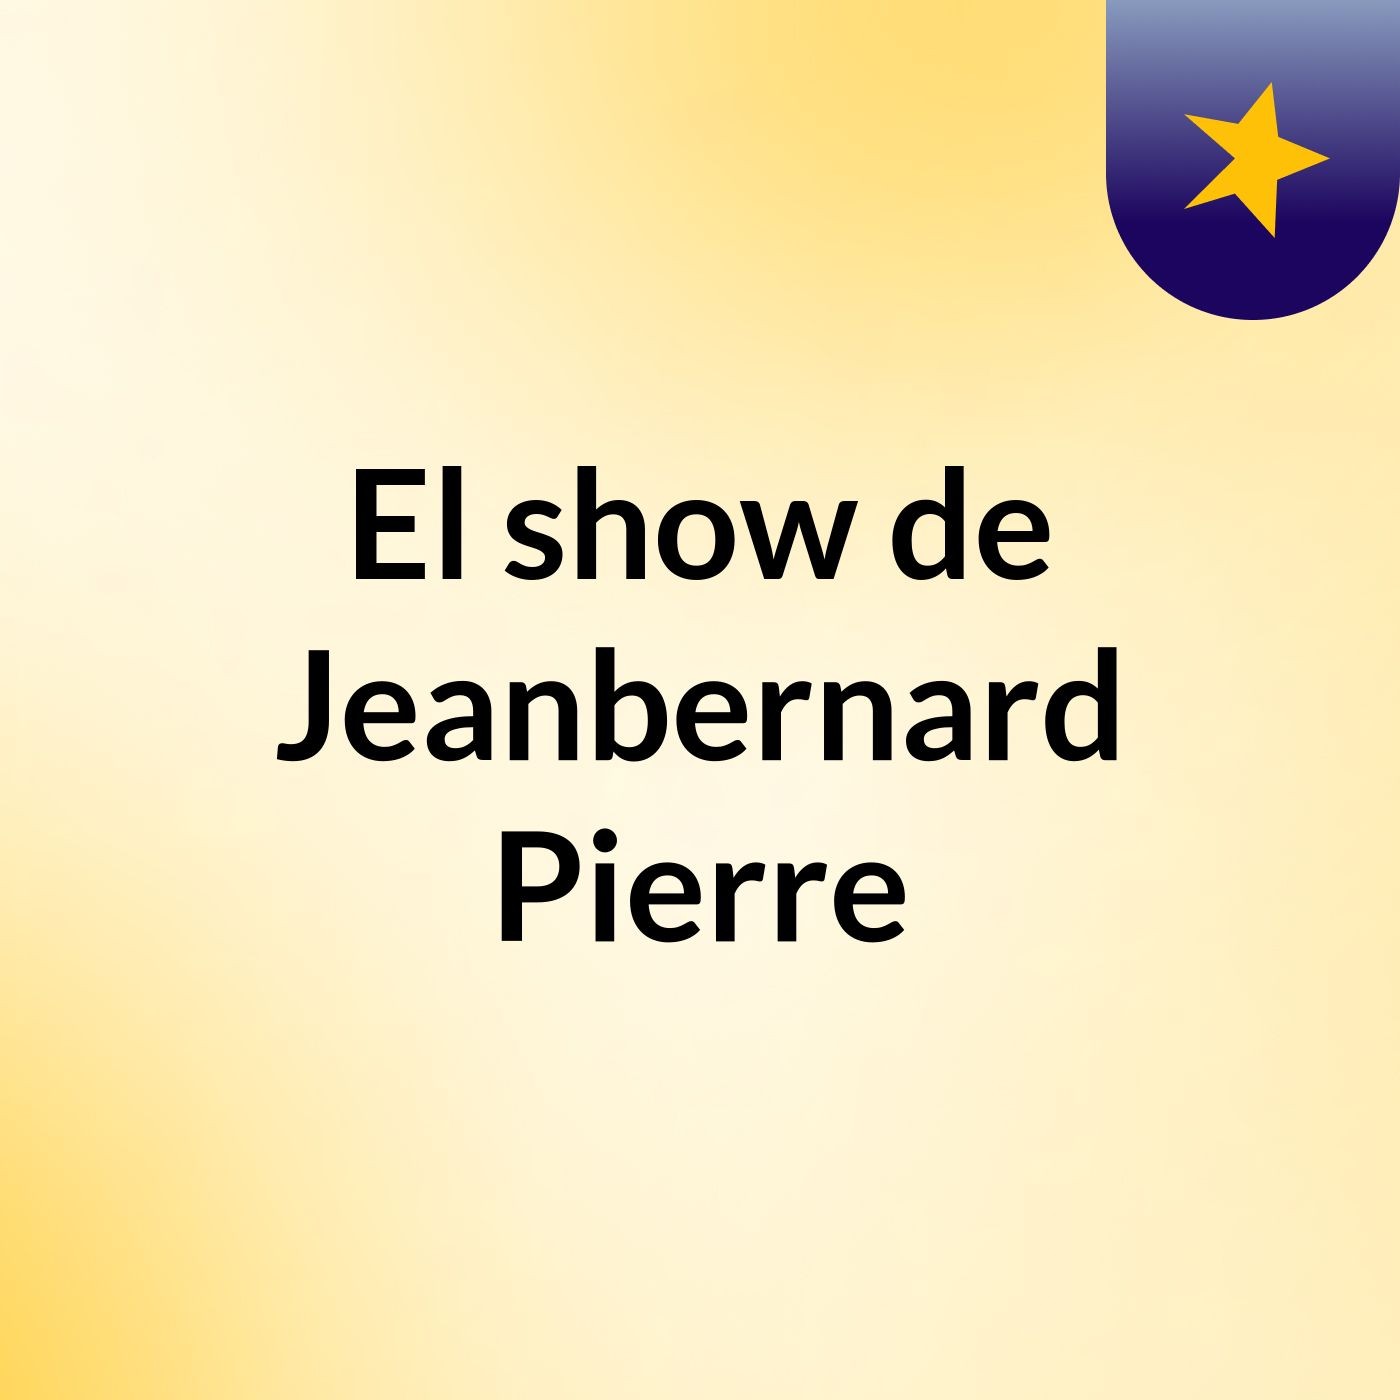 Episodio 4 - El show de Jeanbernard Pierre